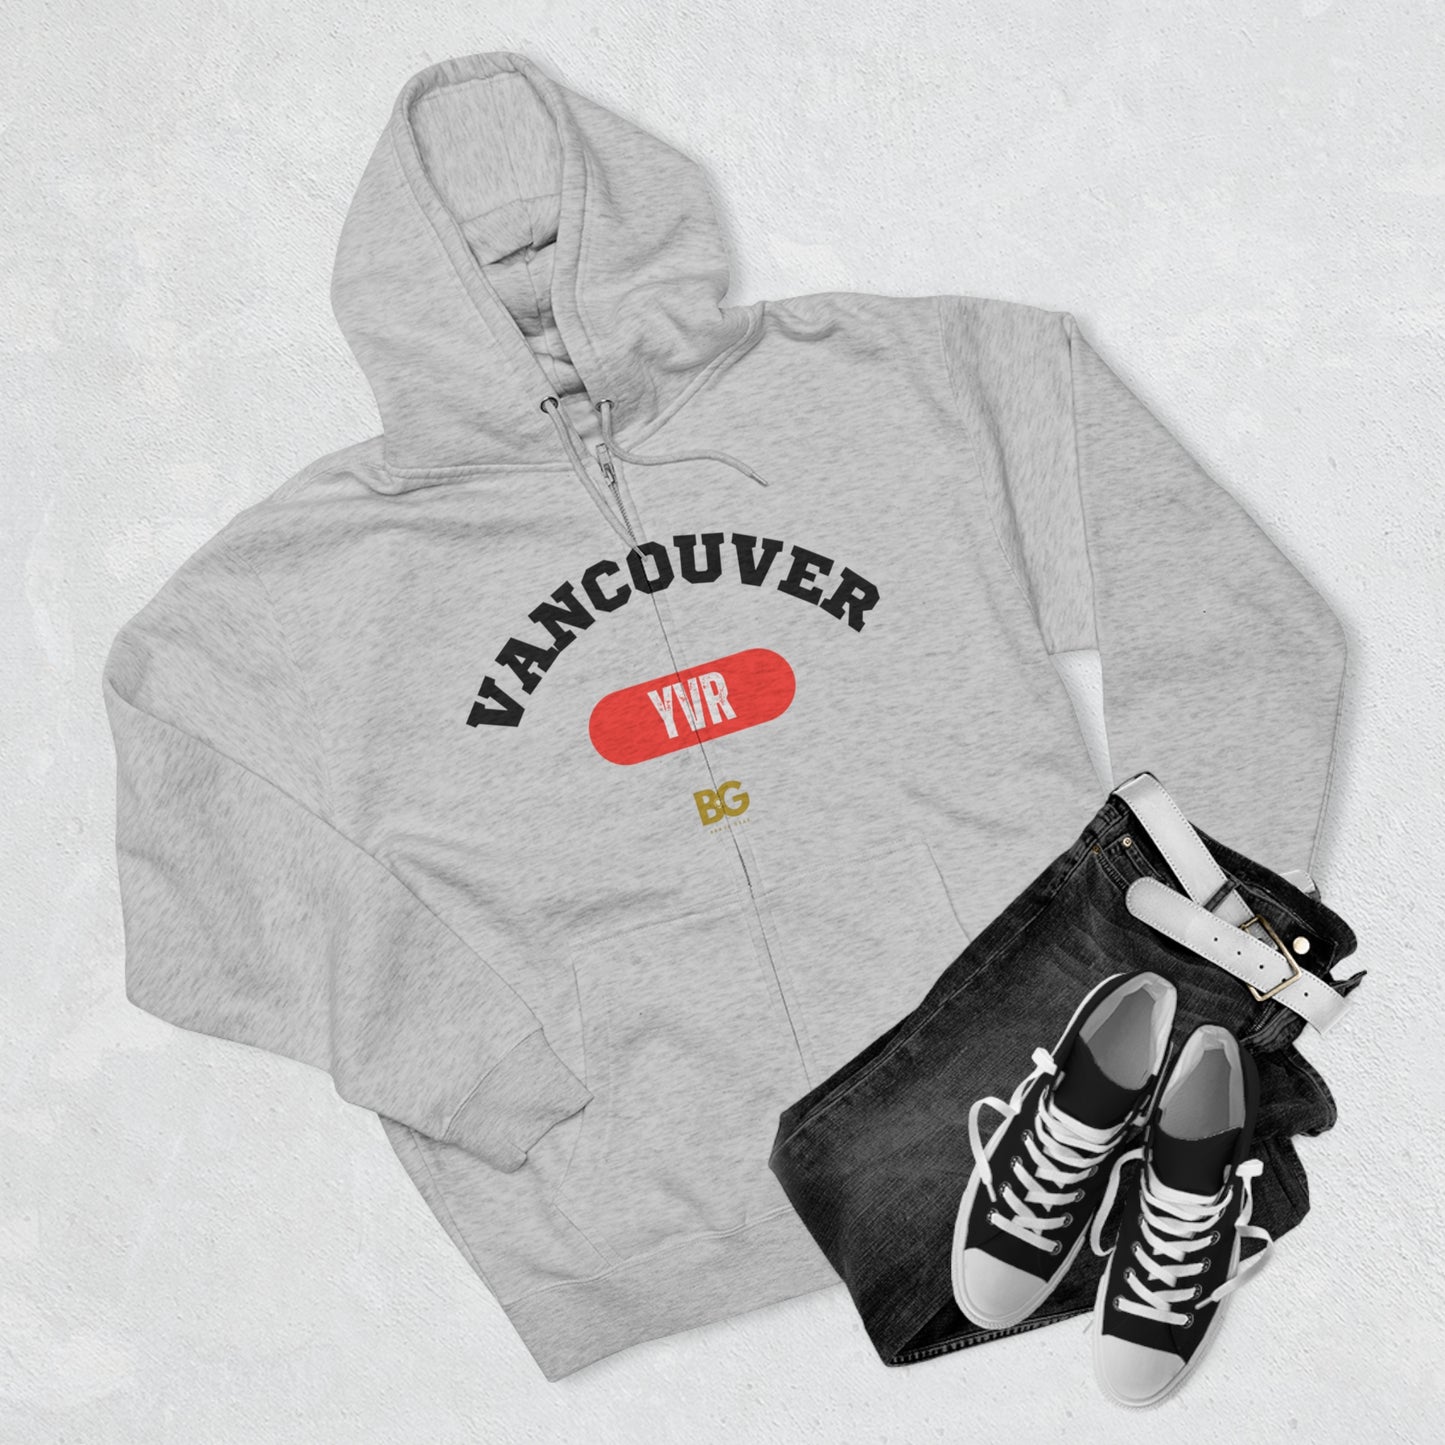 BG "Vancouver YVR" Premium Full Zip Hoodie